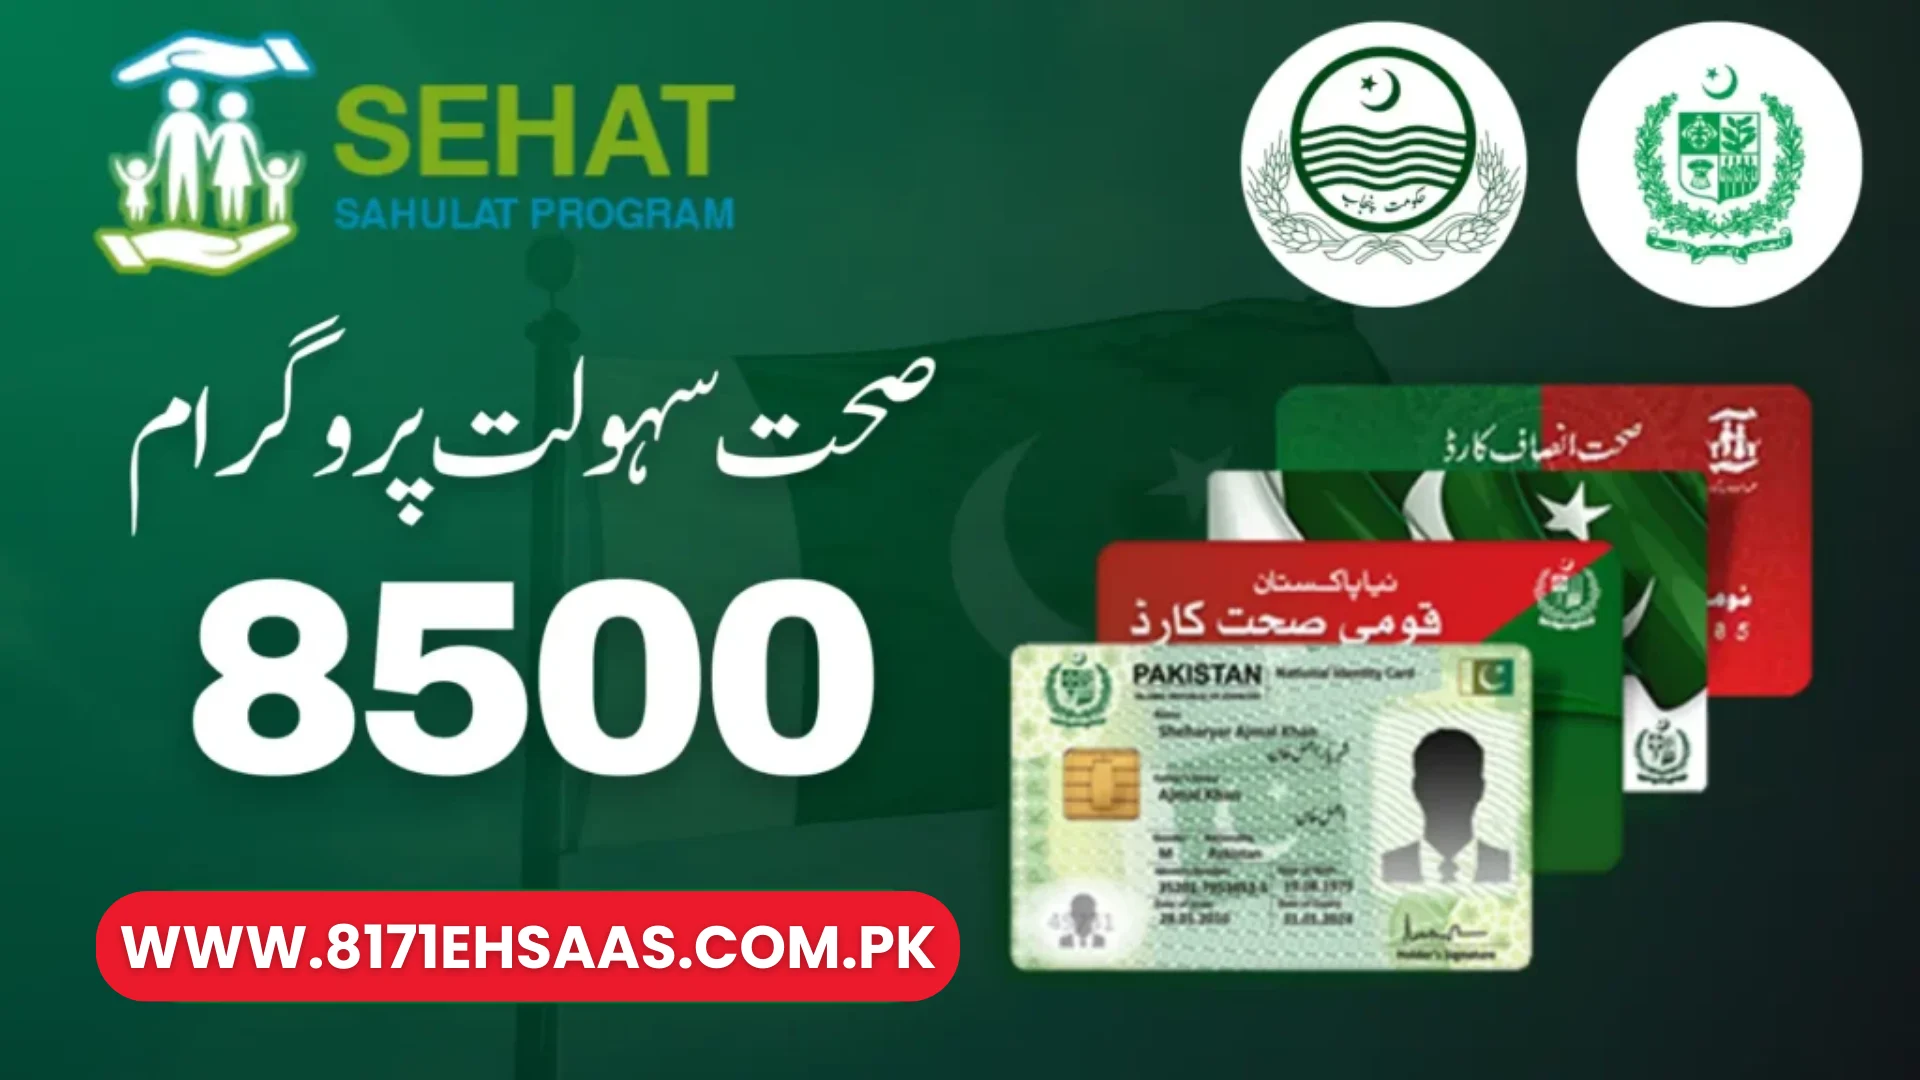 Online registration for sehat sahulat program by Ehsaas